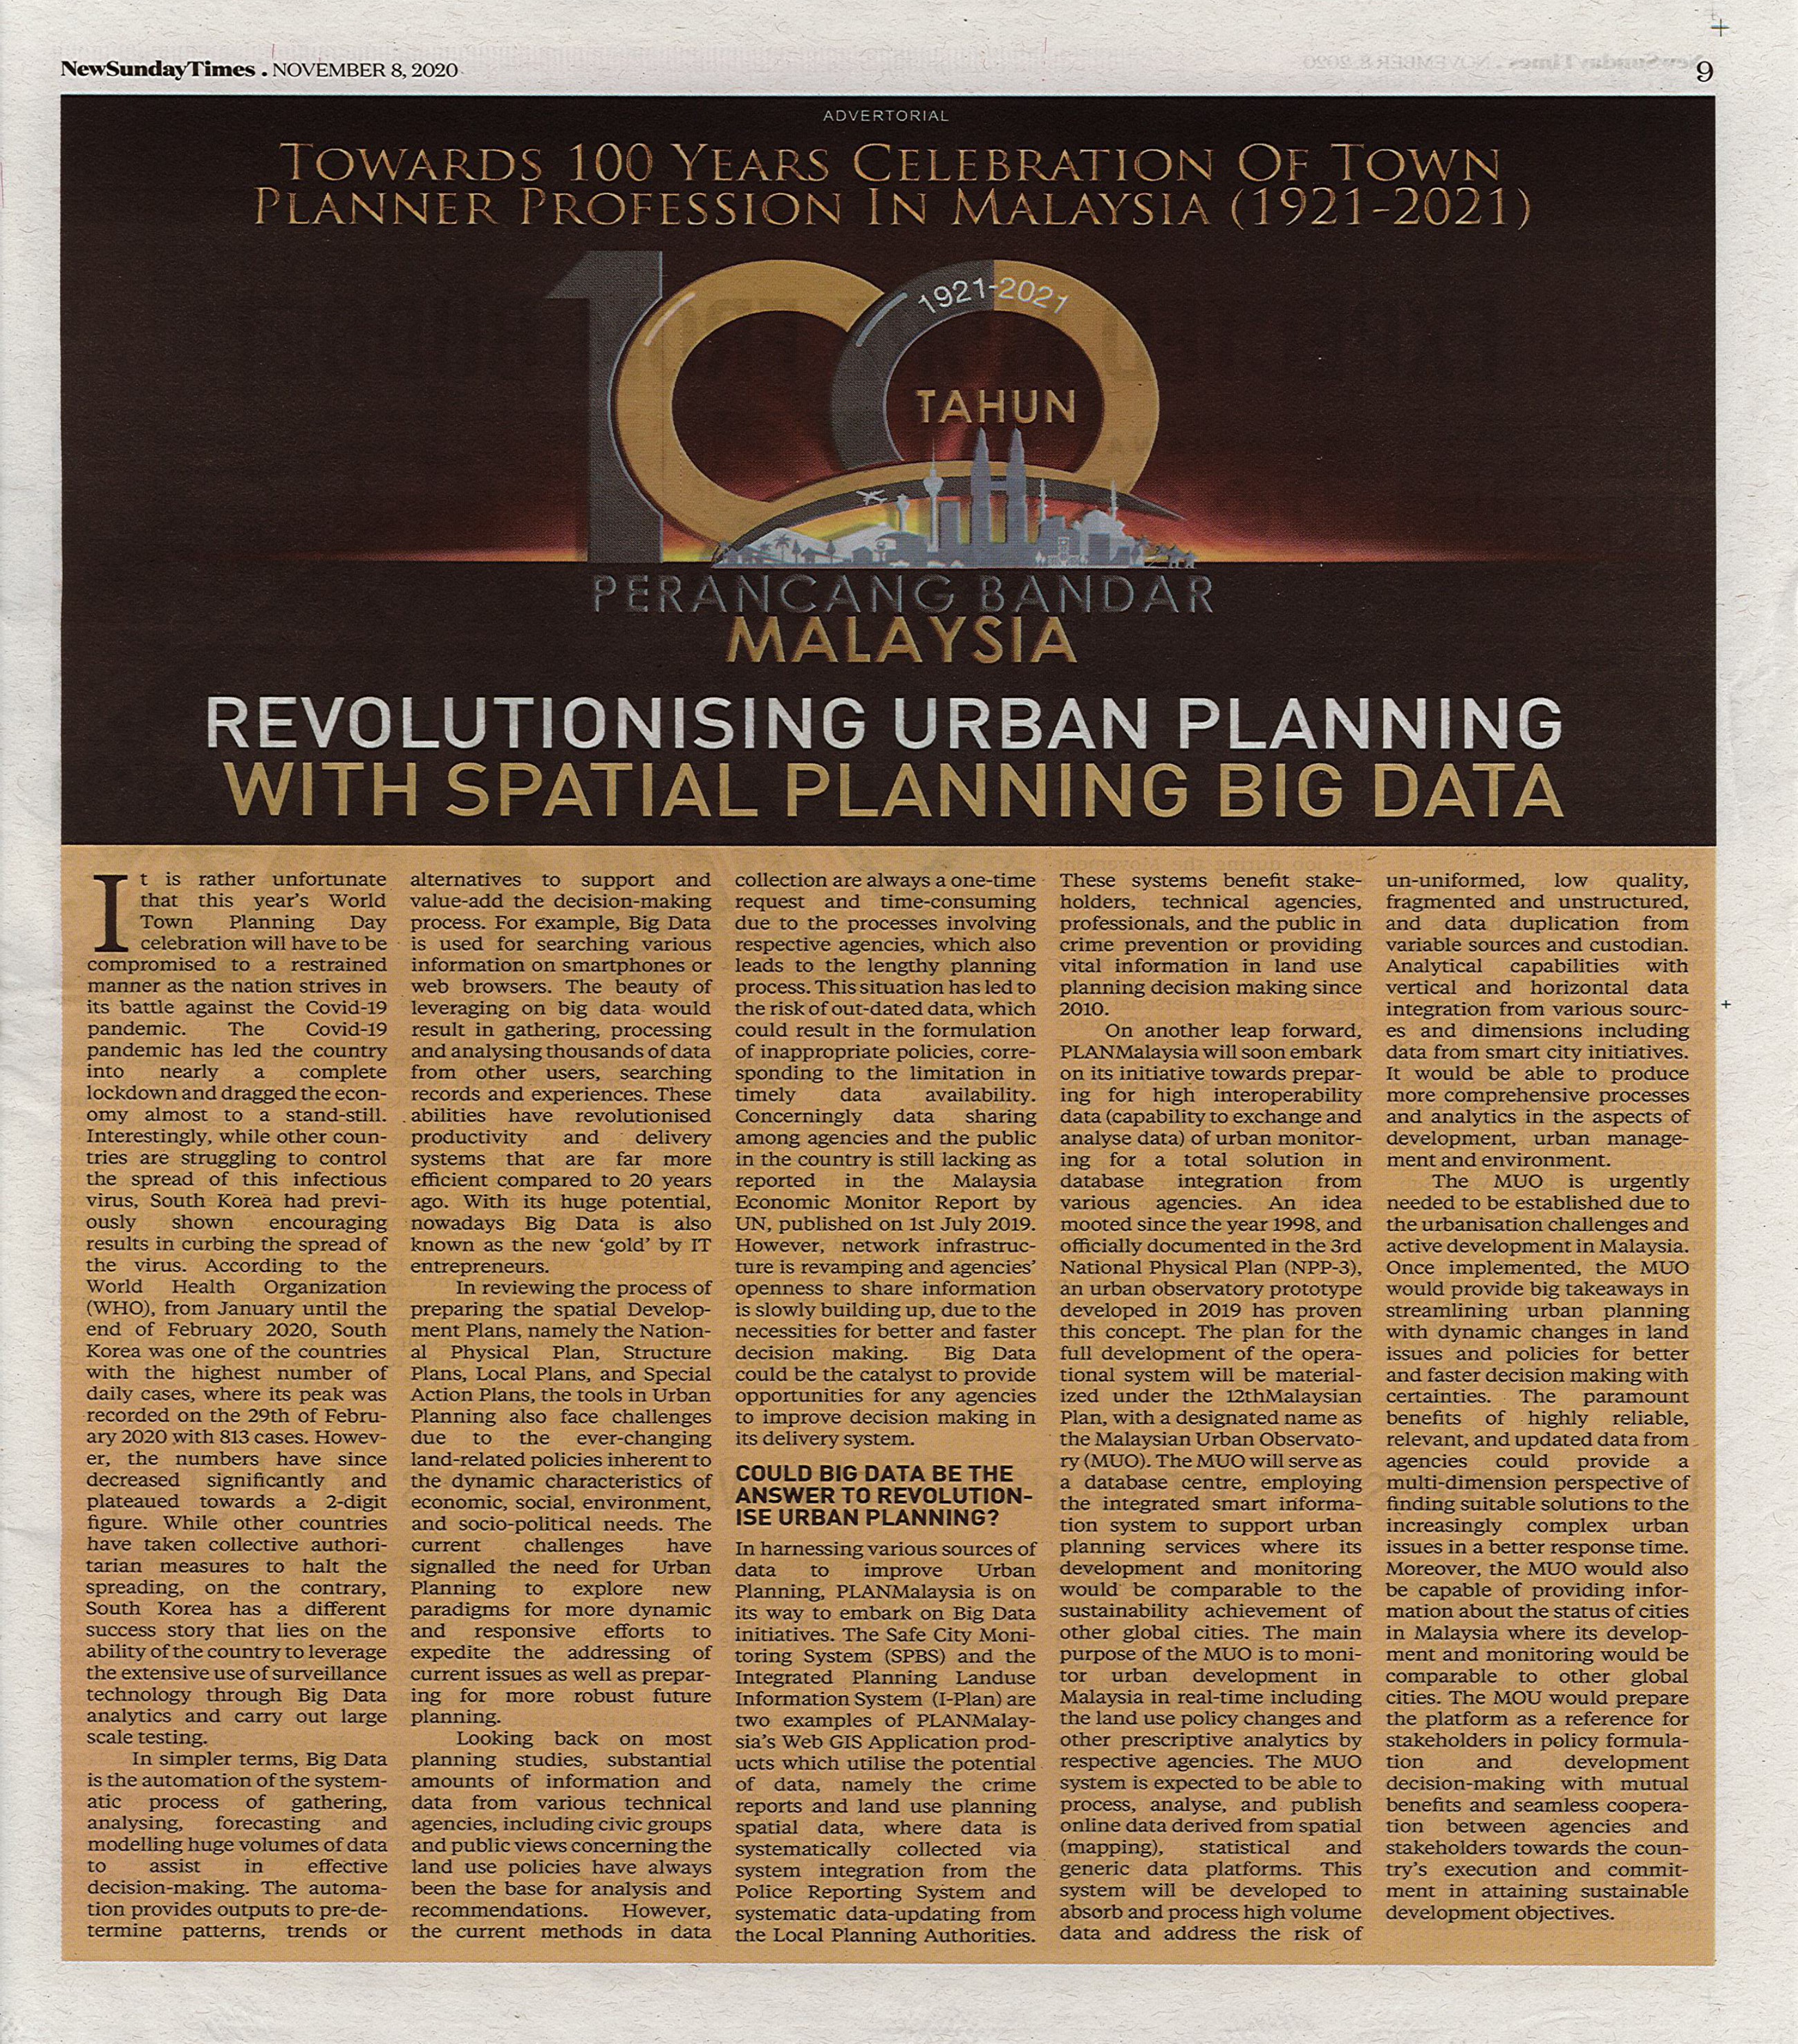 Revolutionising Urban Planning With Spatial Planning Big Data